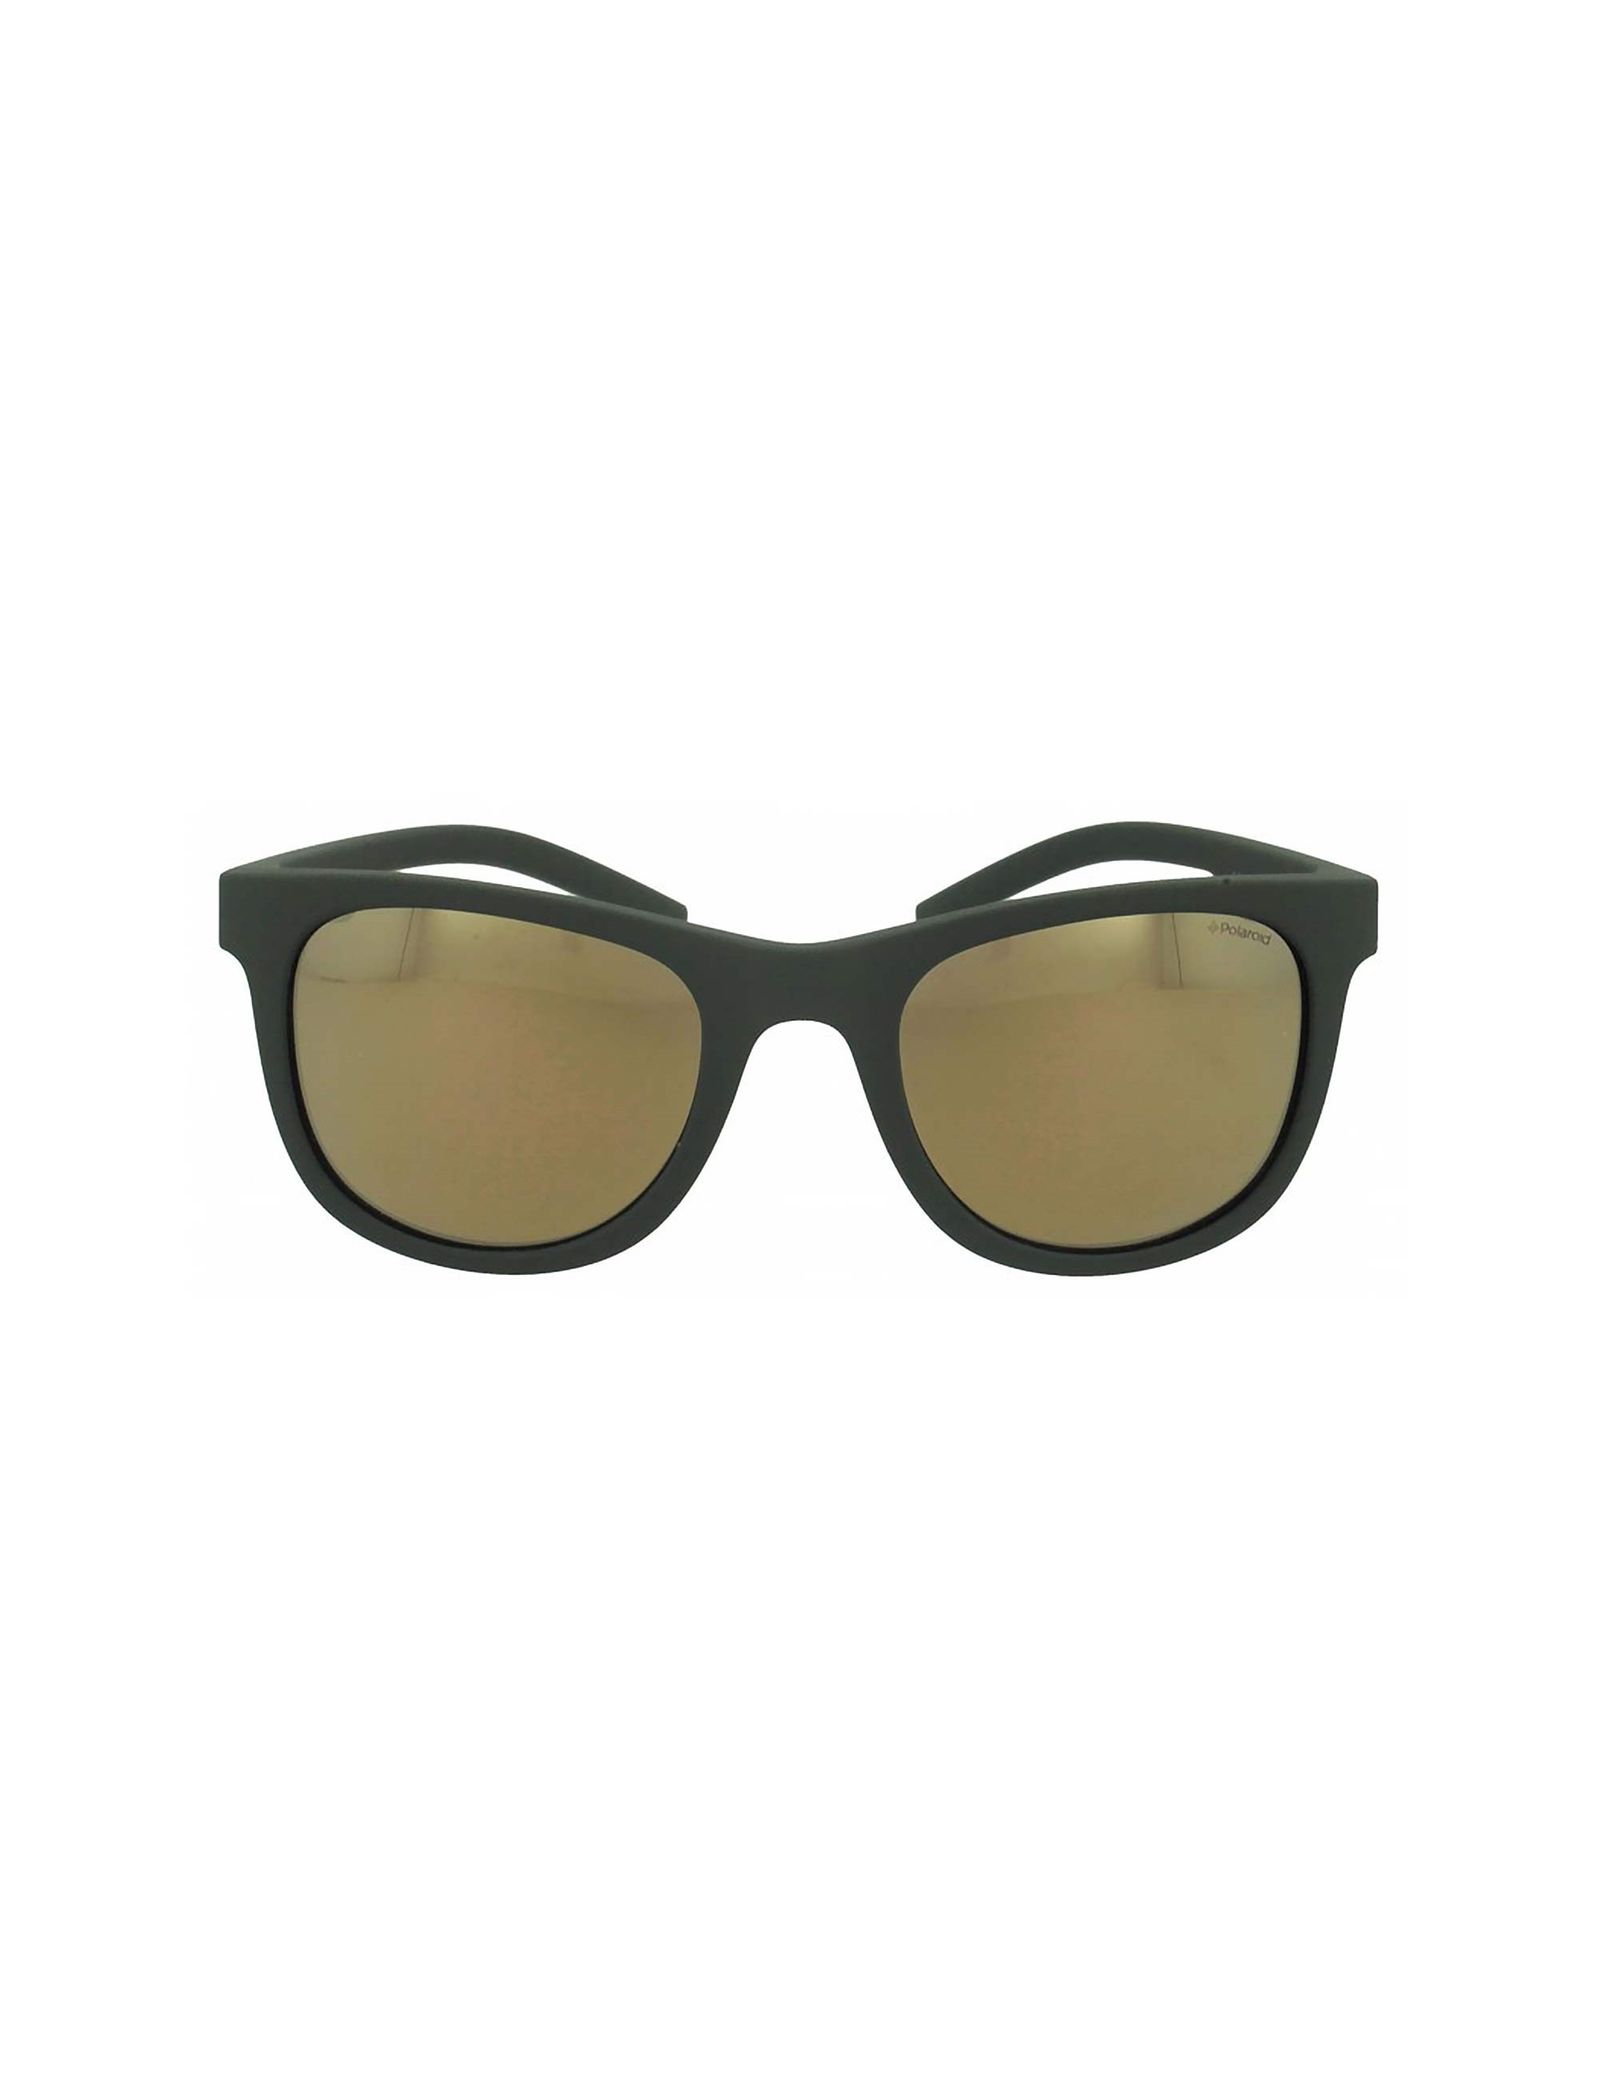 عینک آفتابی مستطیلی بزرگسال - پولاروید - سبز - 2